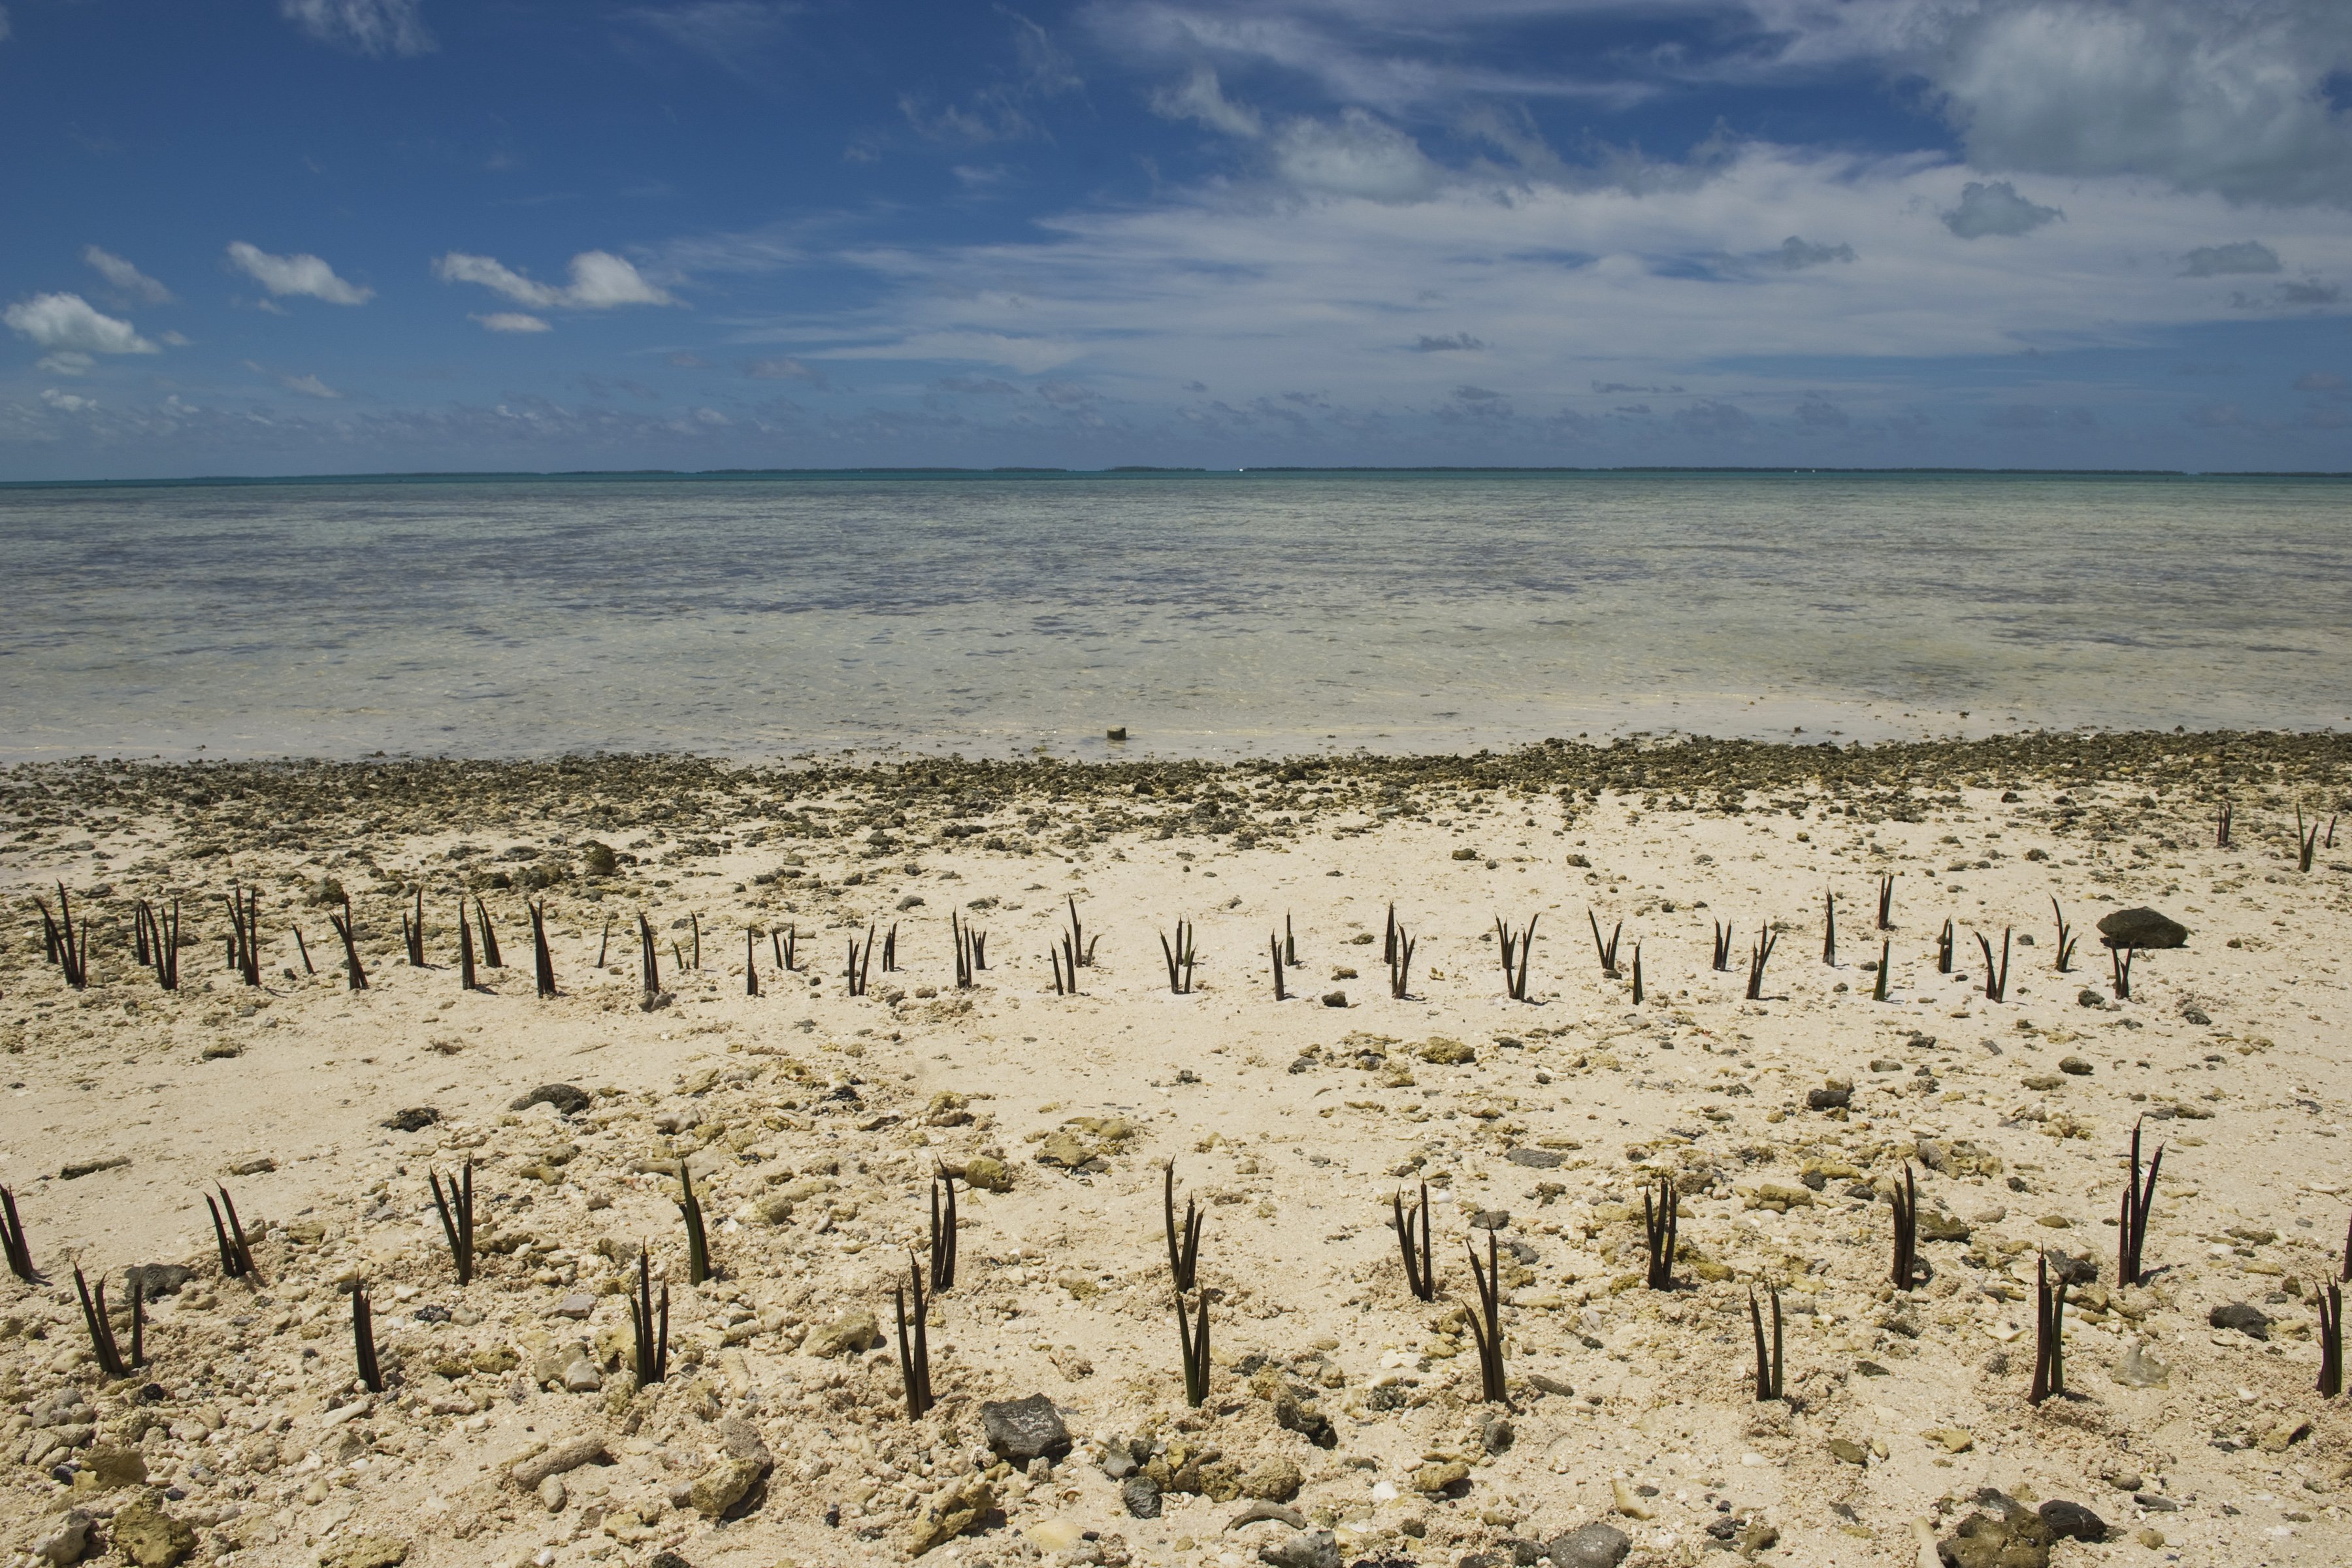 Newly planted mangrove shoots on the island of Tarawa, an atoll in the Pacific island nation of Kiribati.